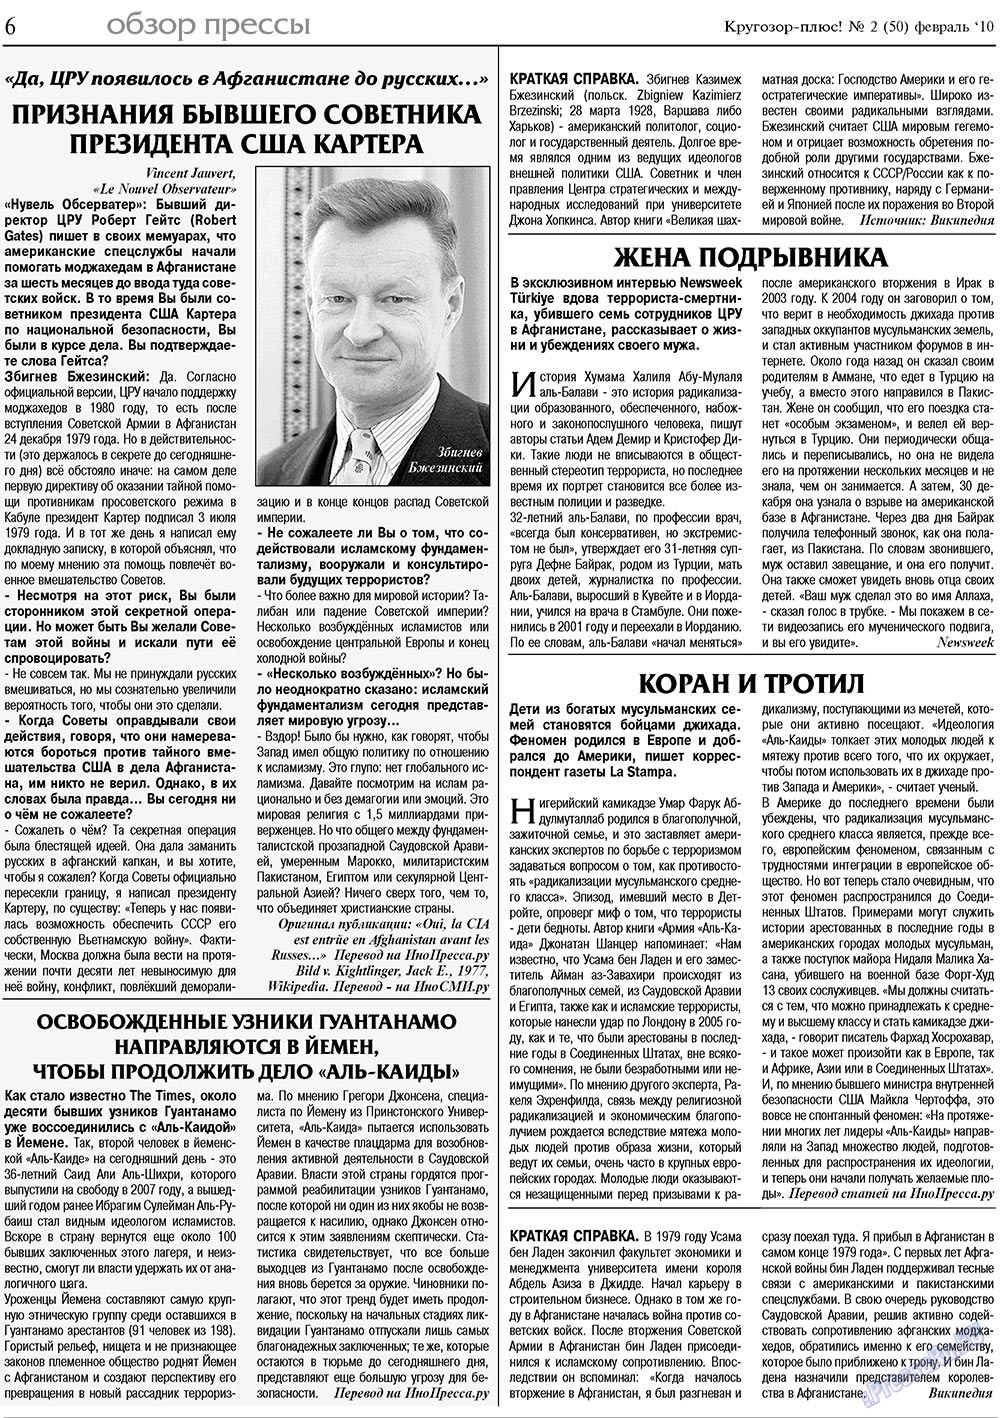 Кругозор плюс! (газета). 2010 год, номер 2, стр. 8